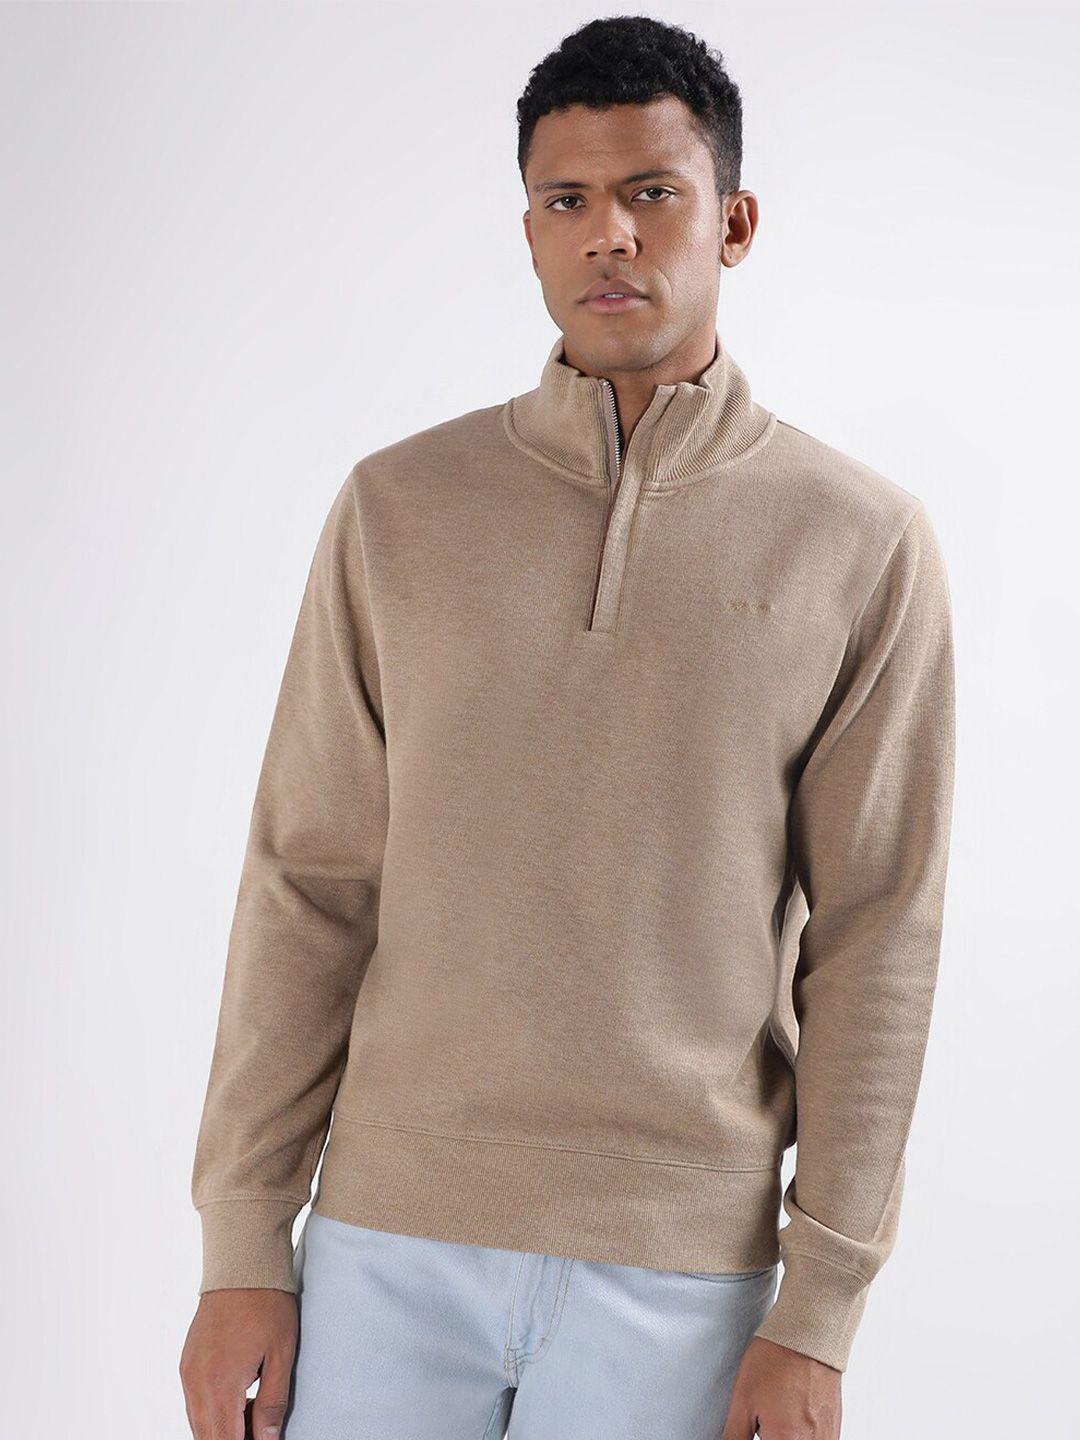 gant-mock-collar-half-zipper-pure-cotton-pullover-sweatshirt